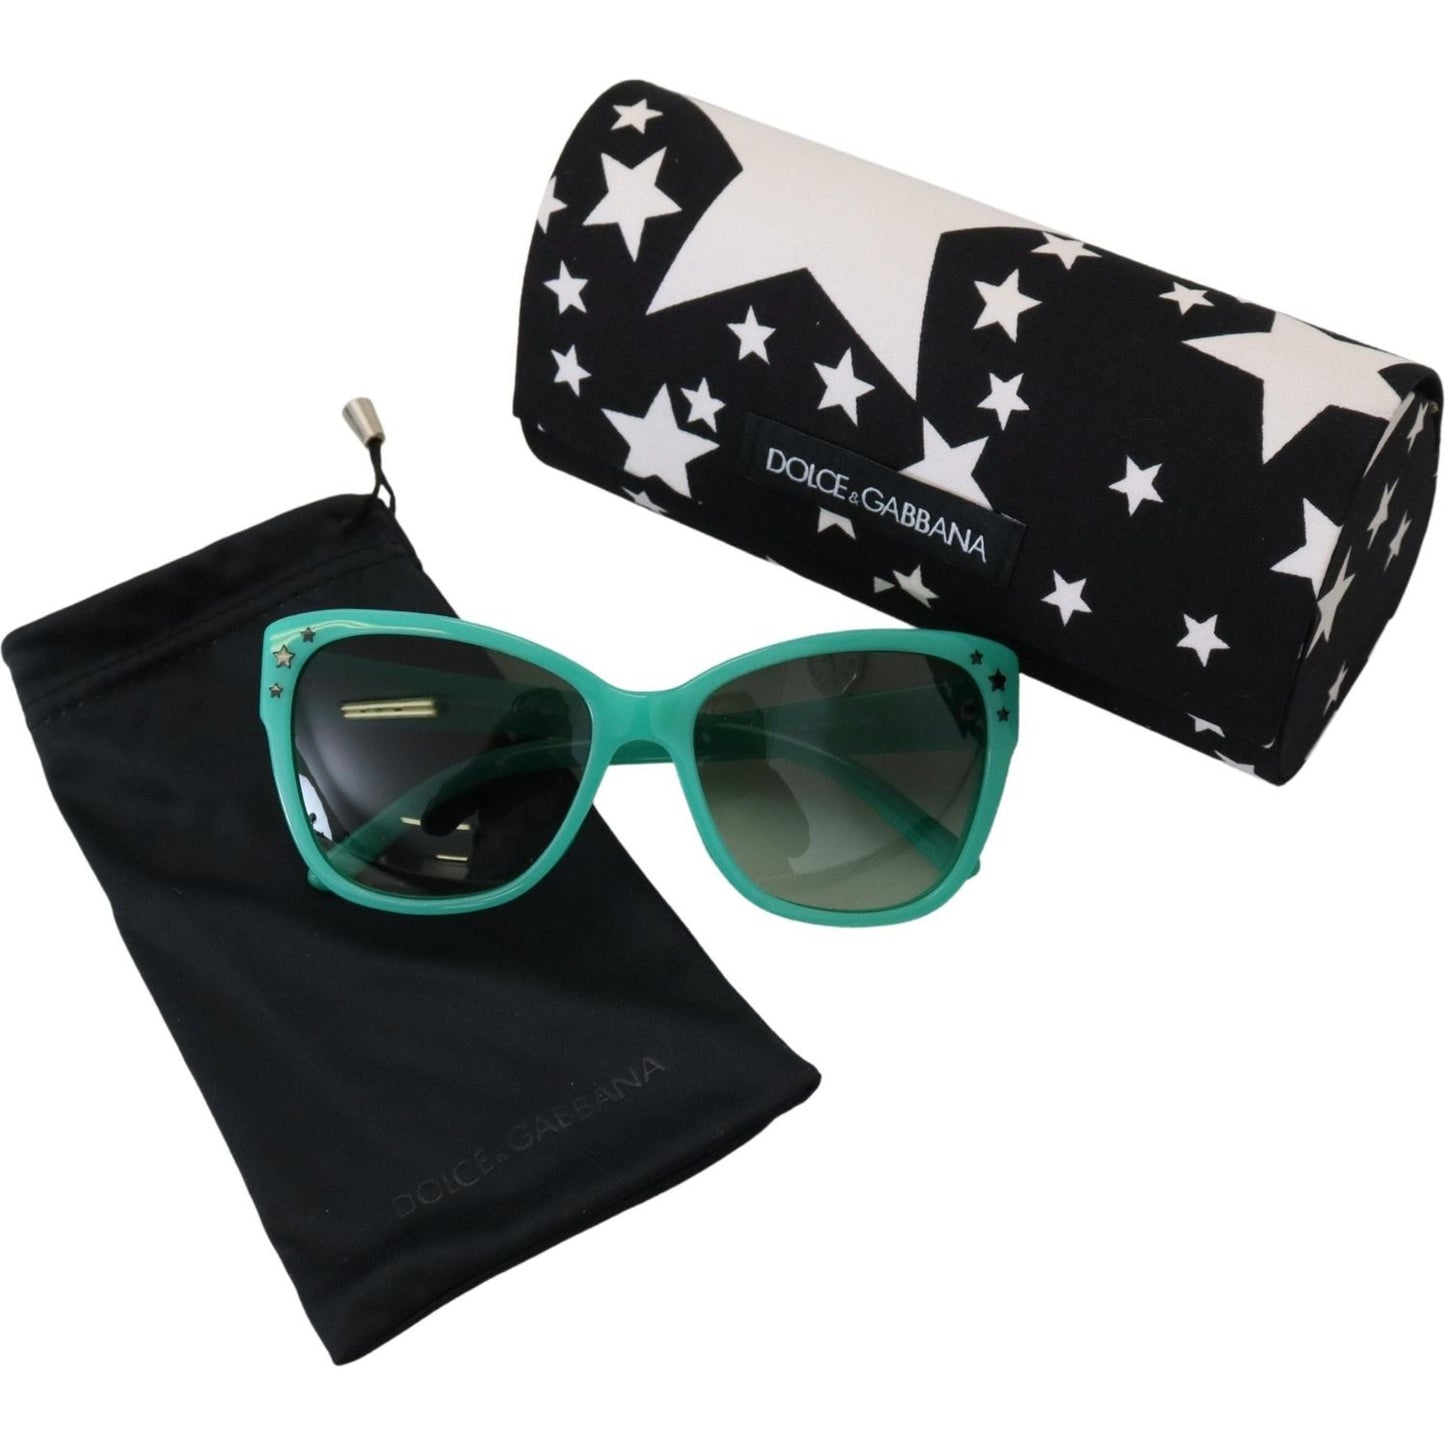 Dolce & Gabbana Enigmatic Star-Patterned Square Sunglasses green-stars-acetate-square-shades-dg4124-sunglasses IMG_4020-92d92e36-1a2.jpg